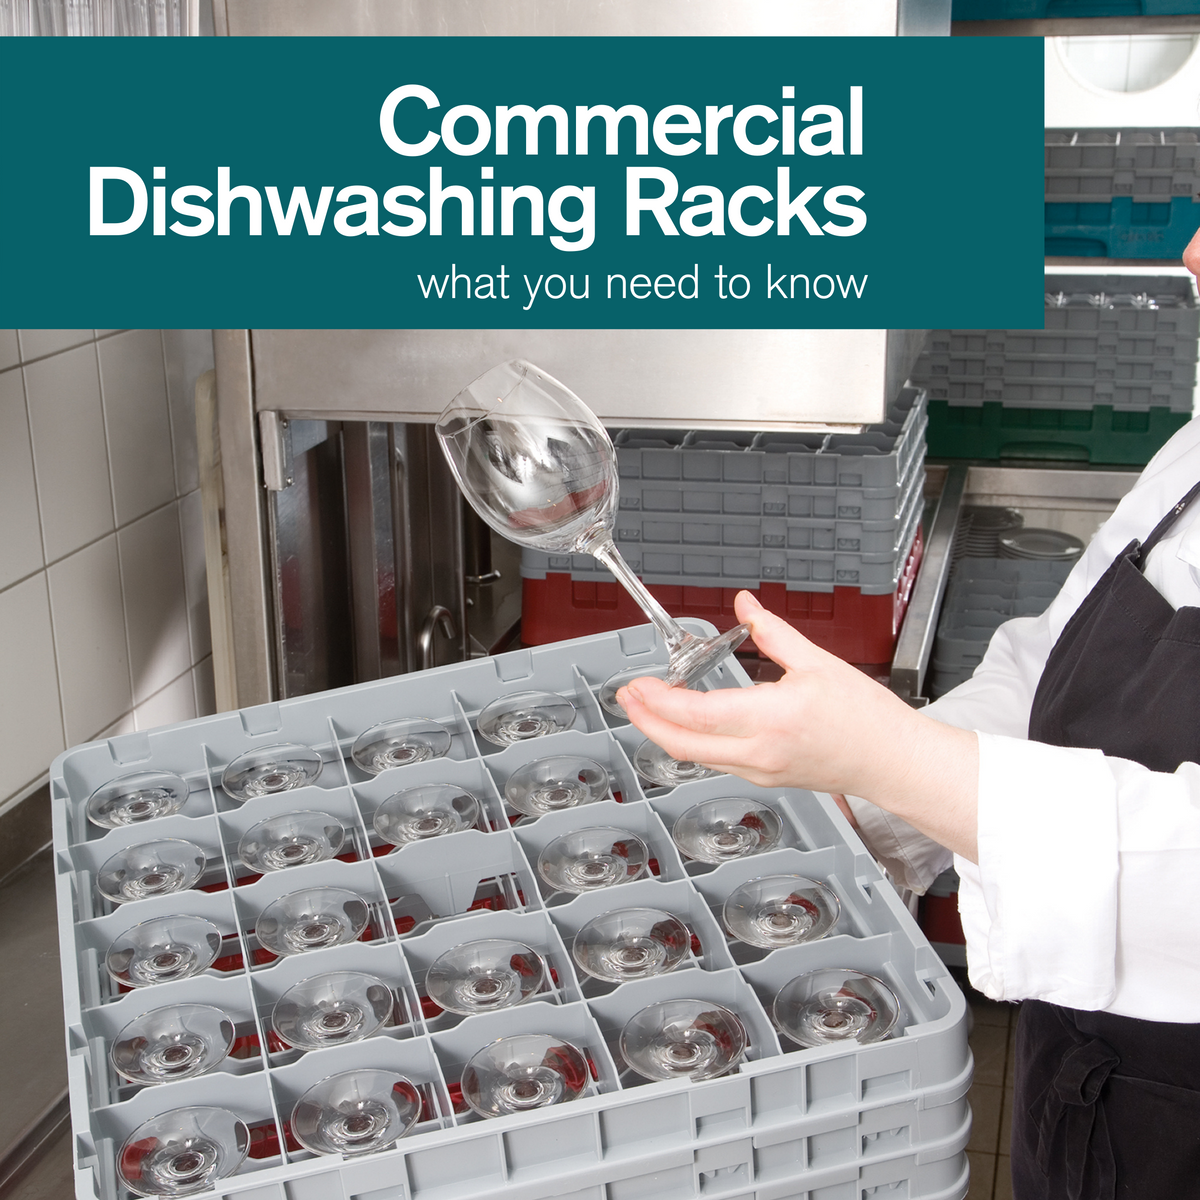 Dishwashing Racks, Commercial Dish Racks in Stock - ULINE